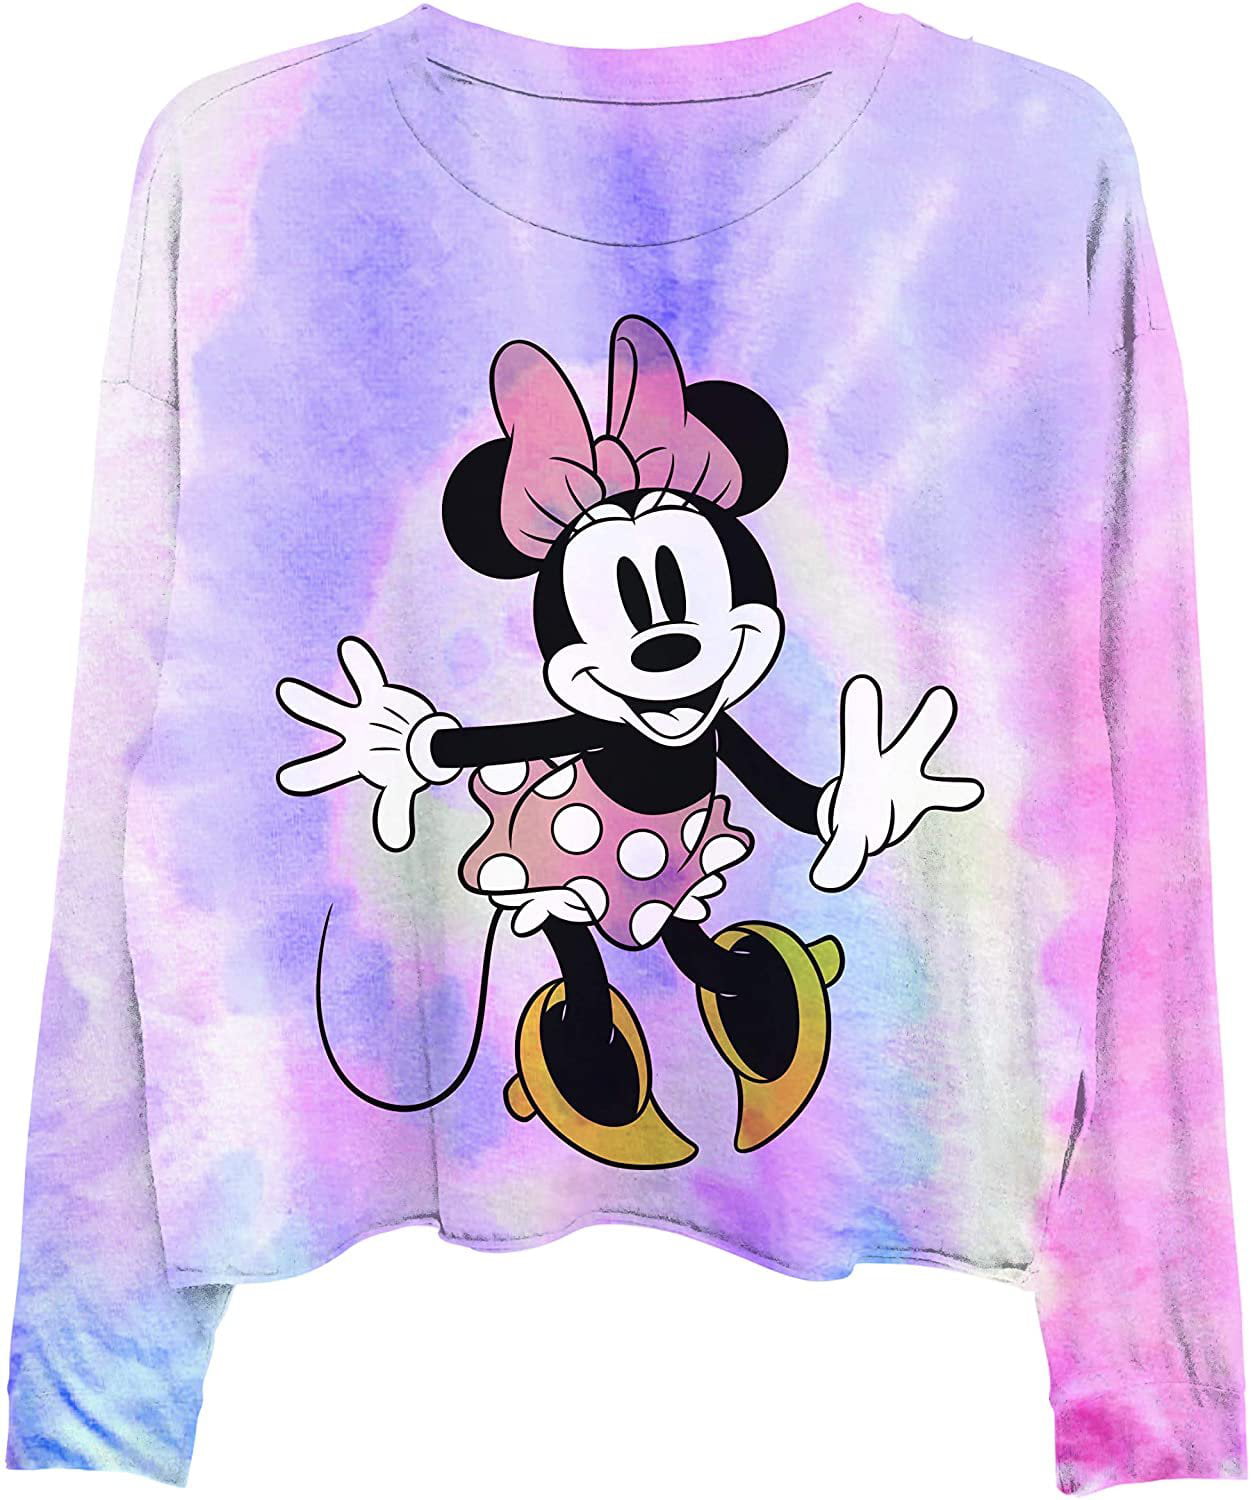 Long Sleeve Mickey Mouse Shirt Women's 